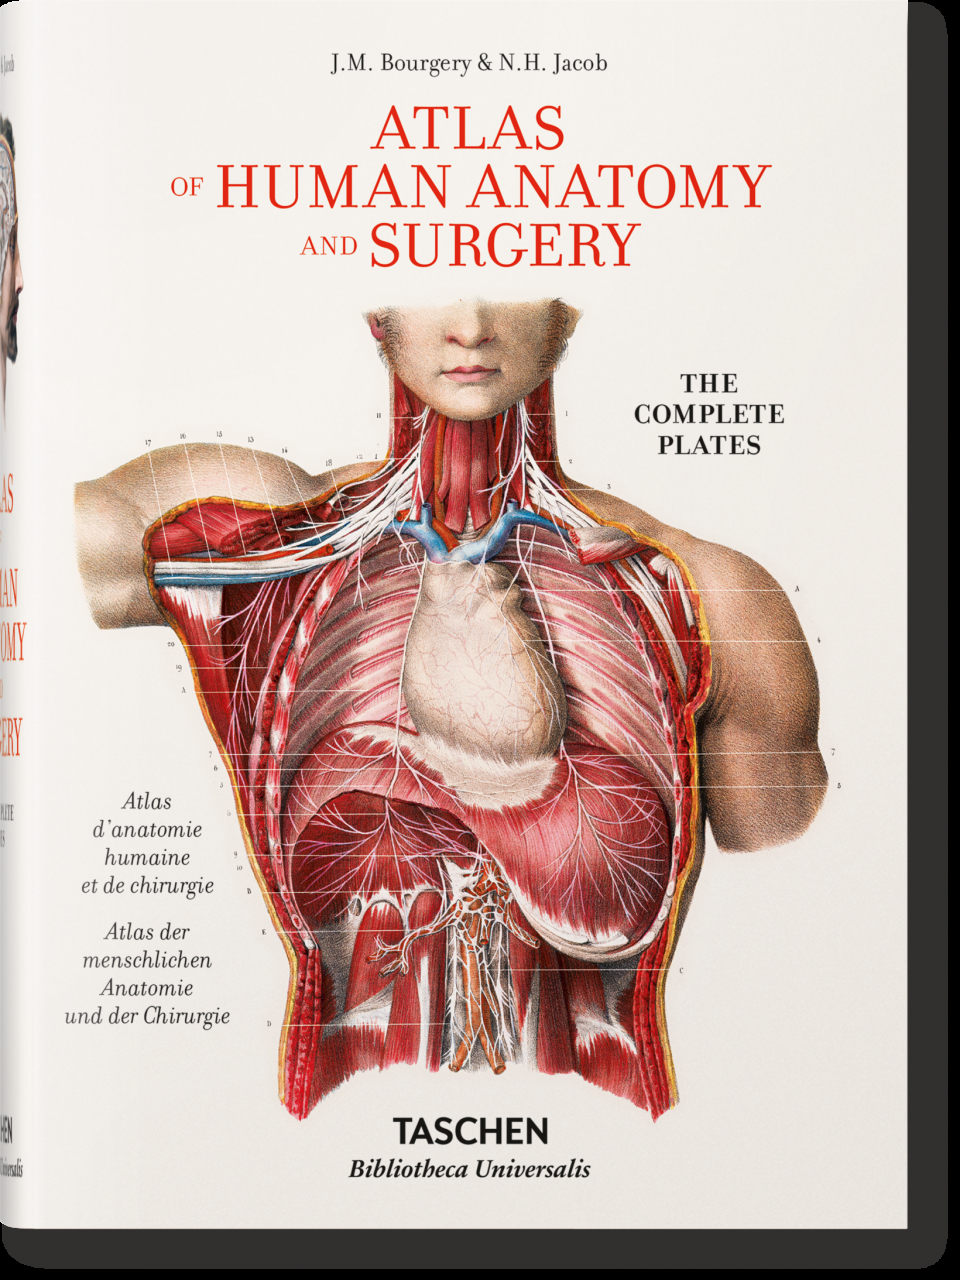 Human Anatomy Diagram Jean Marc Bourgery Atlas Of Human Anatomy And Surgery